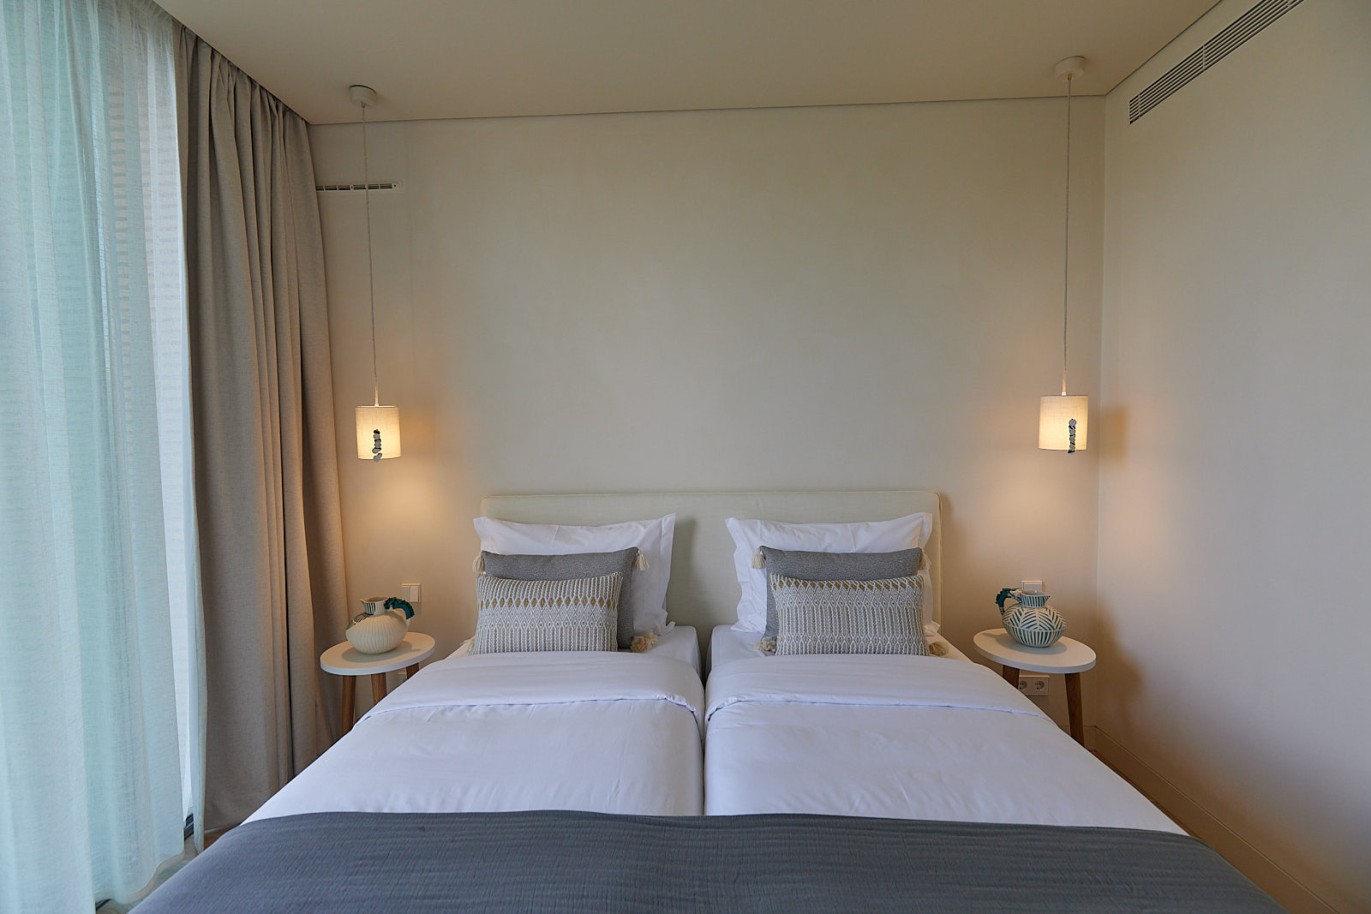 2 bedroom apartment in resort, for sale in Porches, Algarve_229116